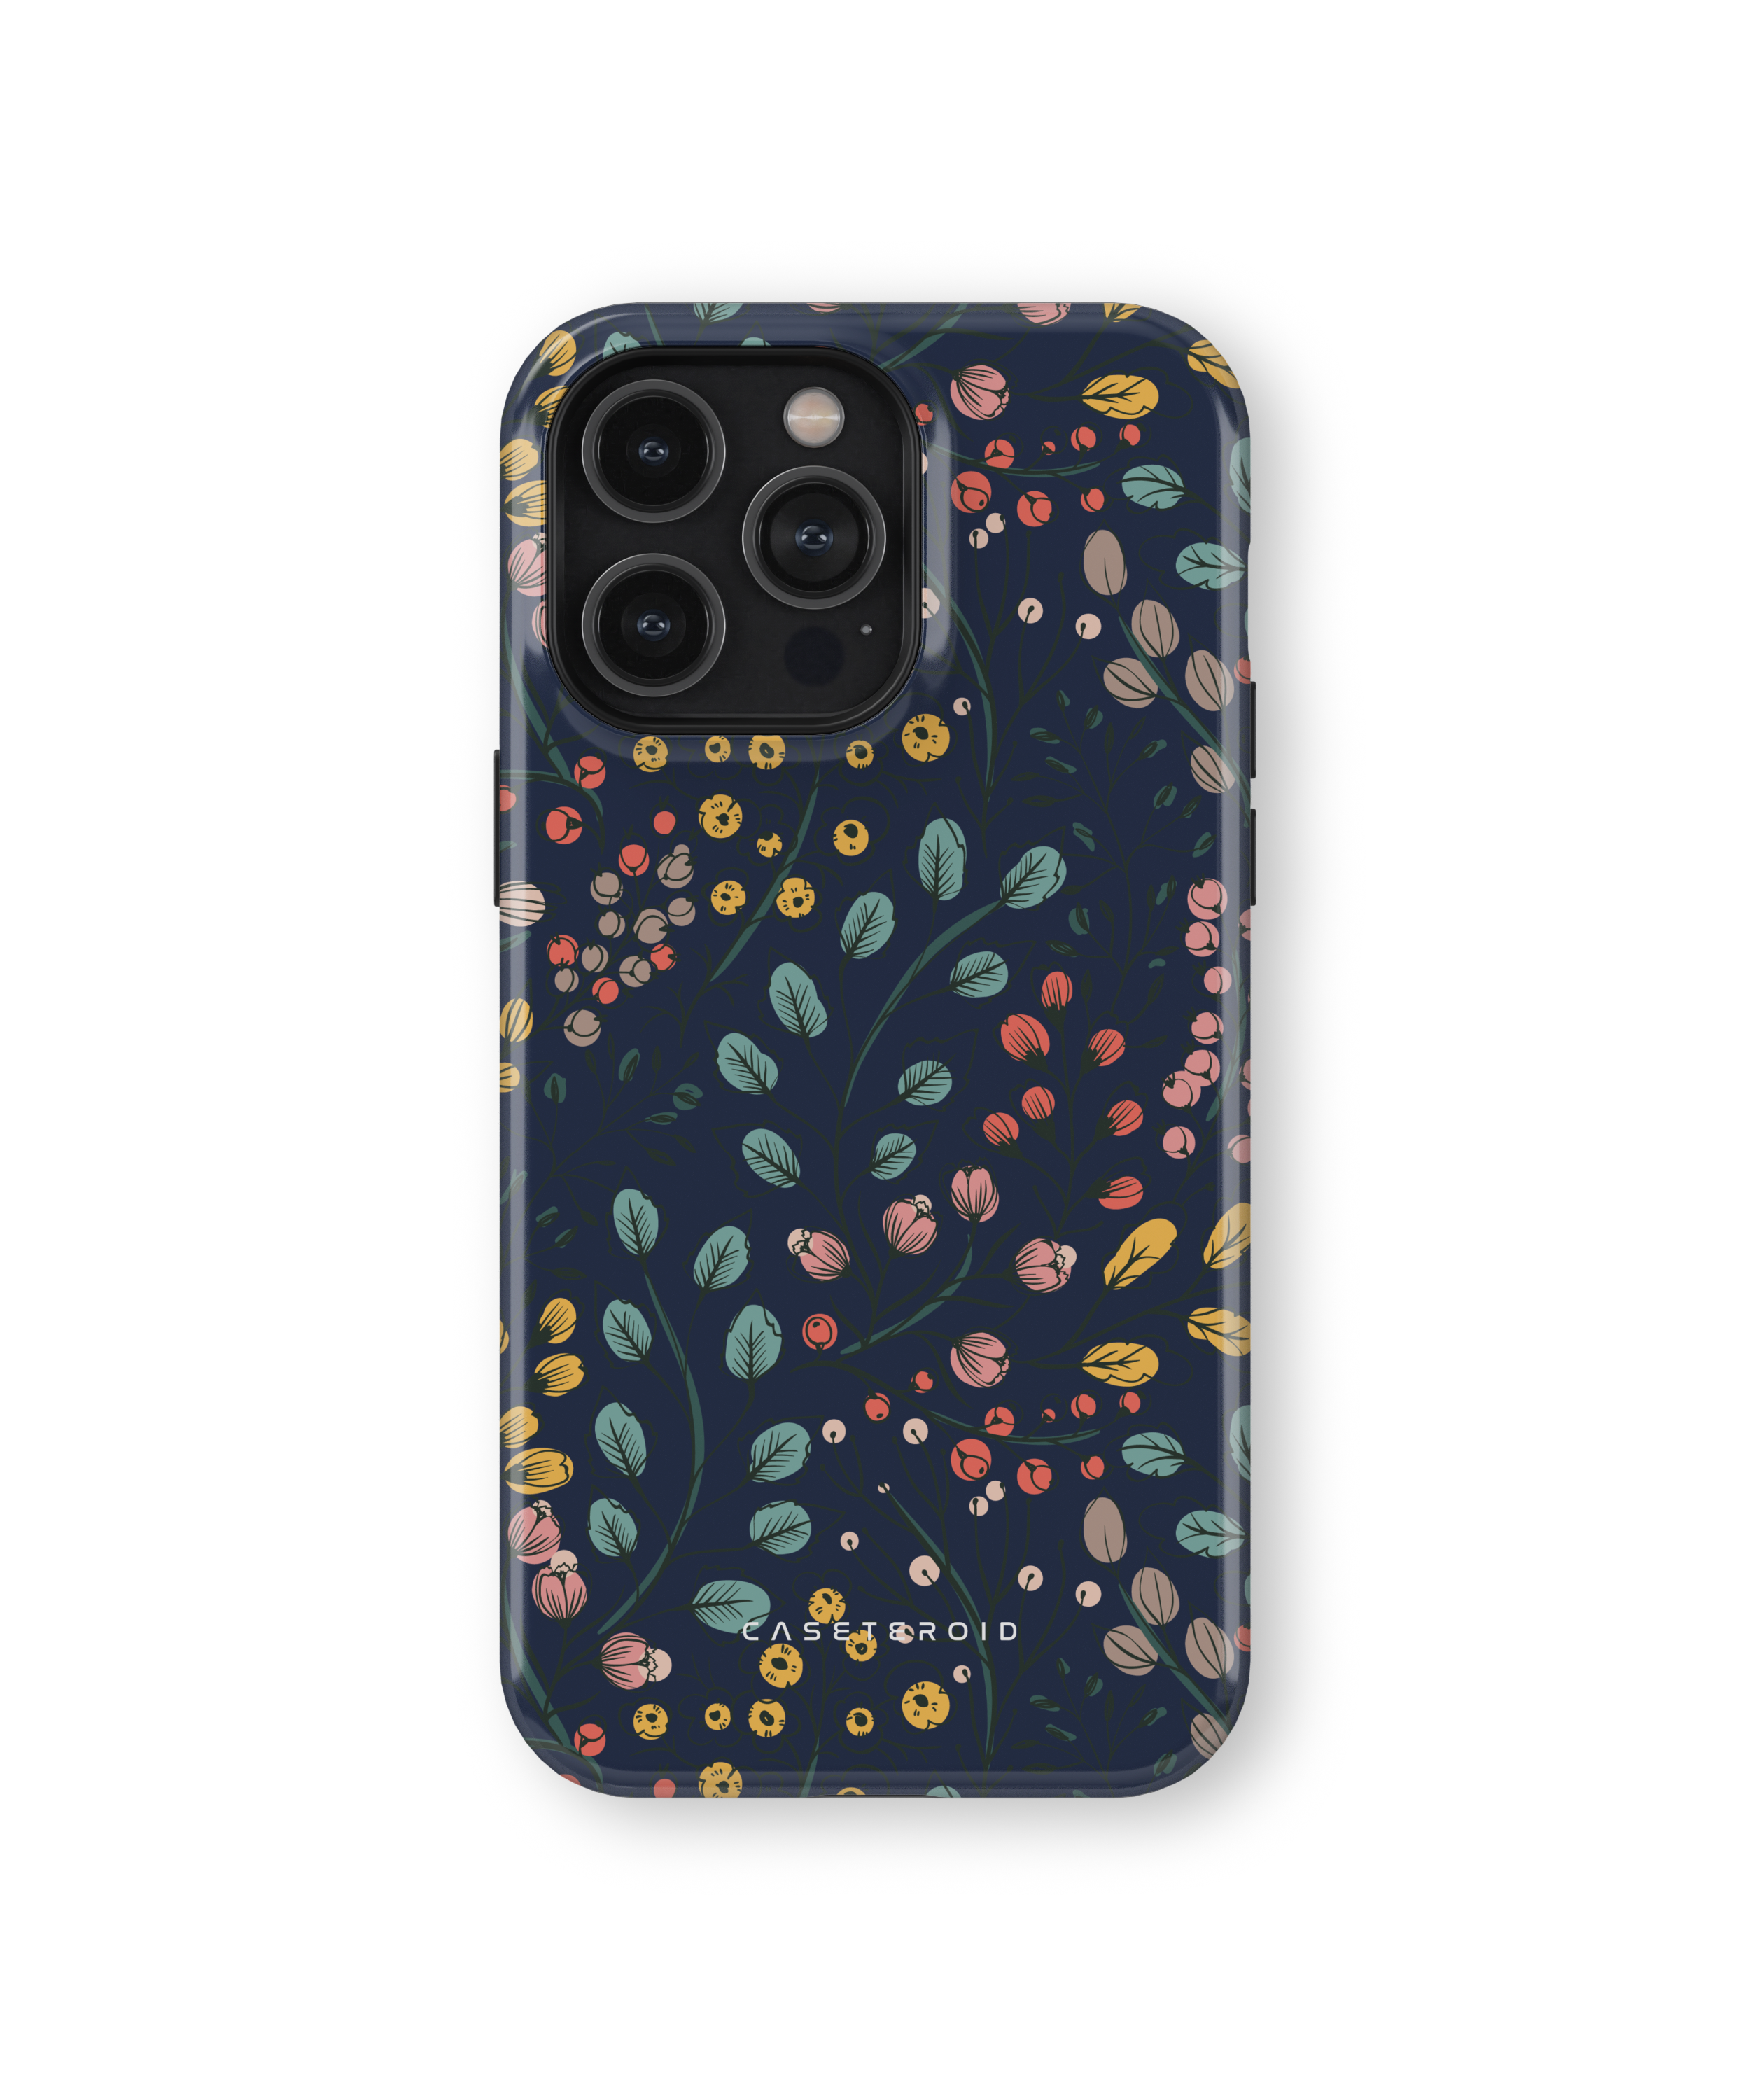 iPhone Tough Case - Botanical Kaleidoscope - CASETEROID